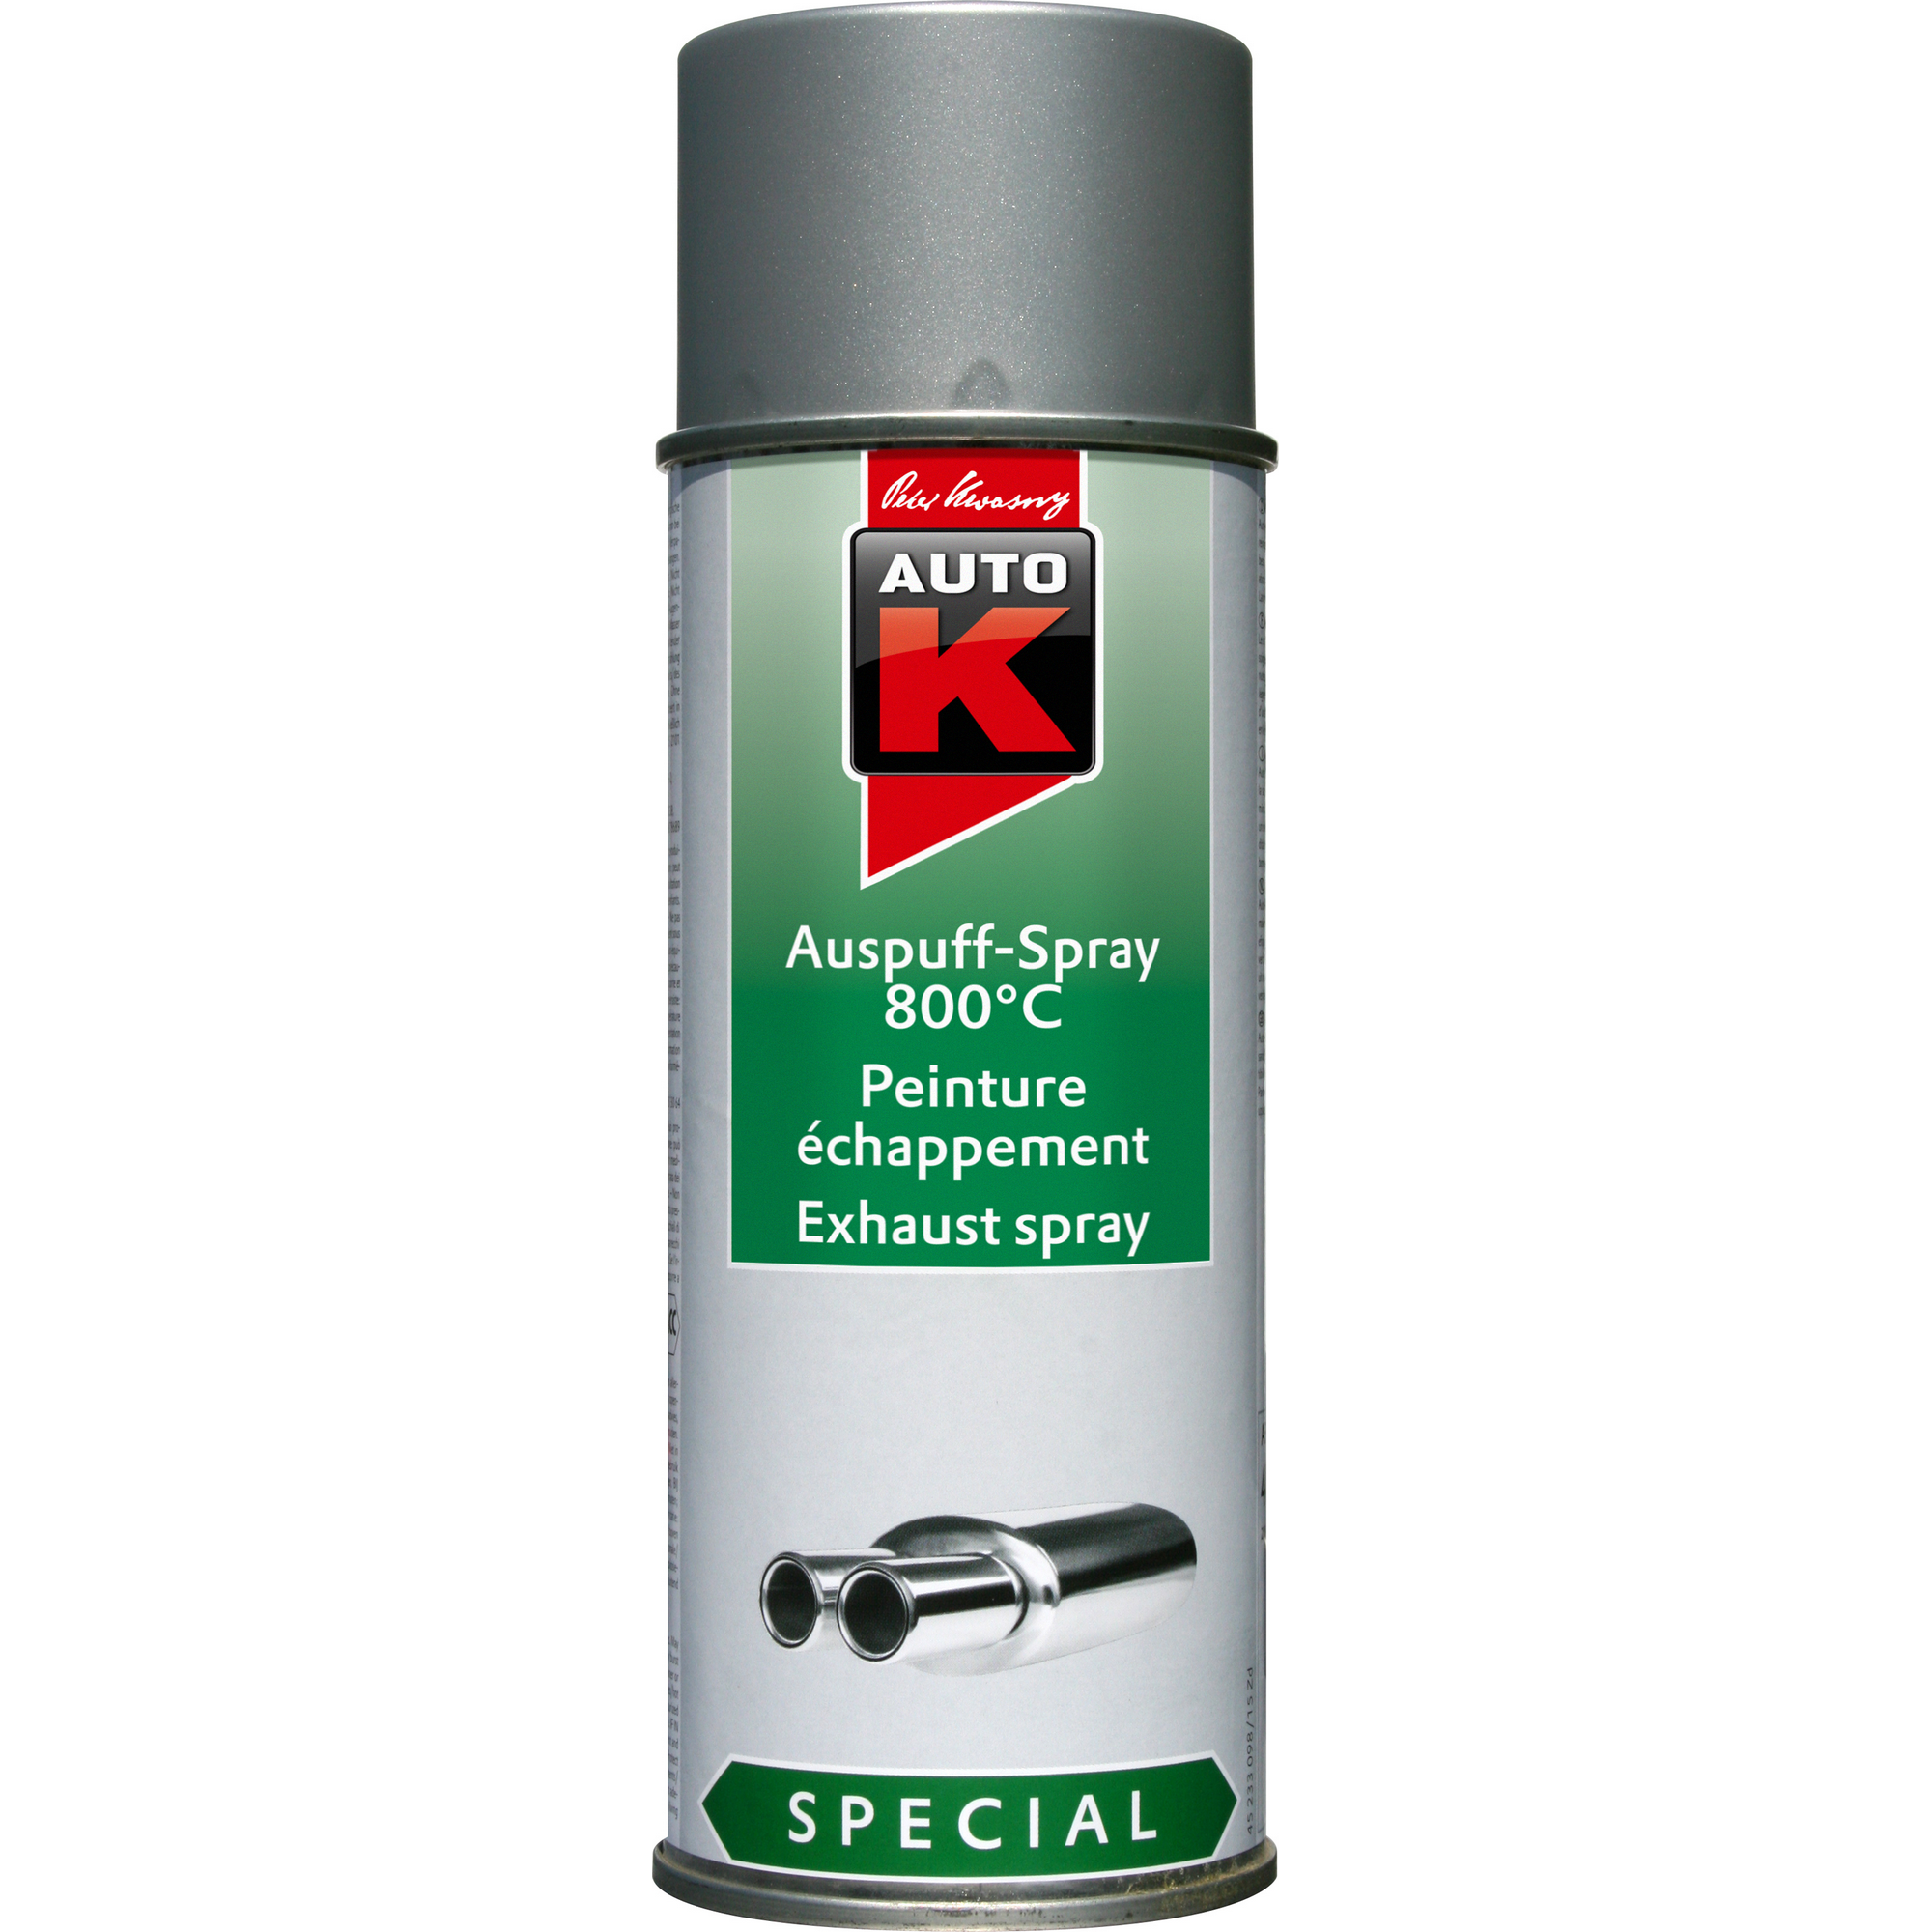 Auto-K Auspuff-Spray silber 800°C 400 ml + product picture